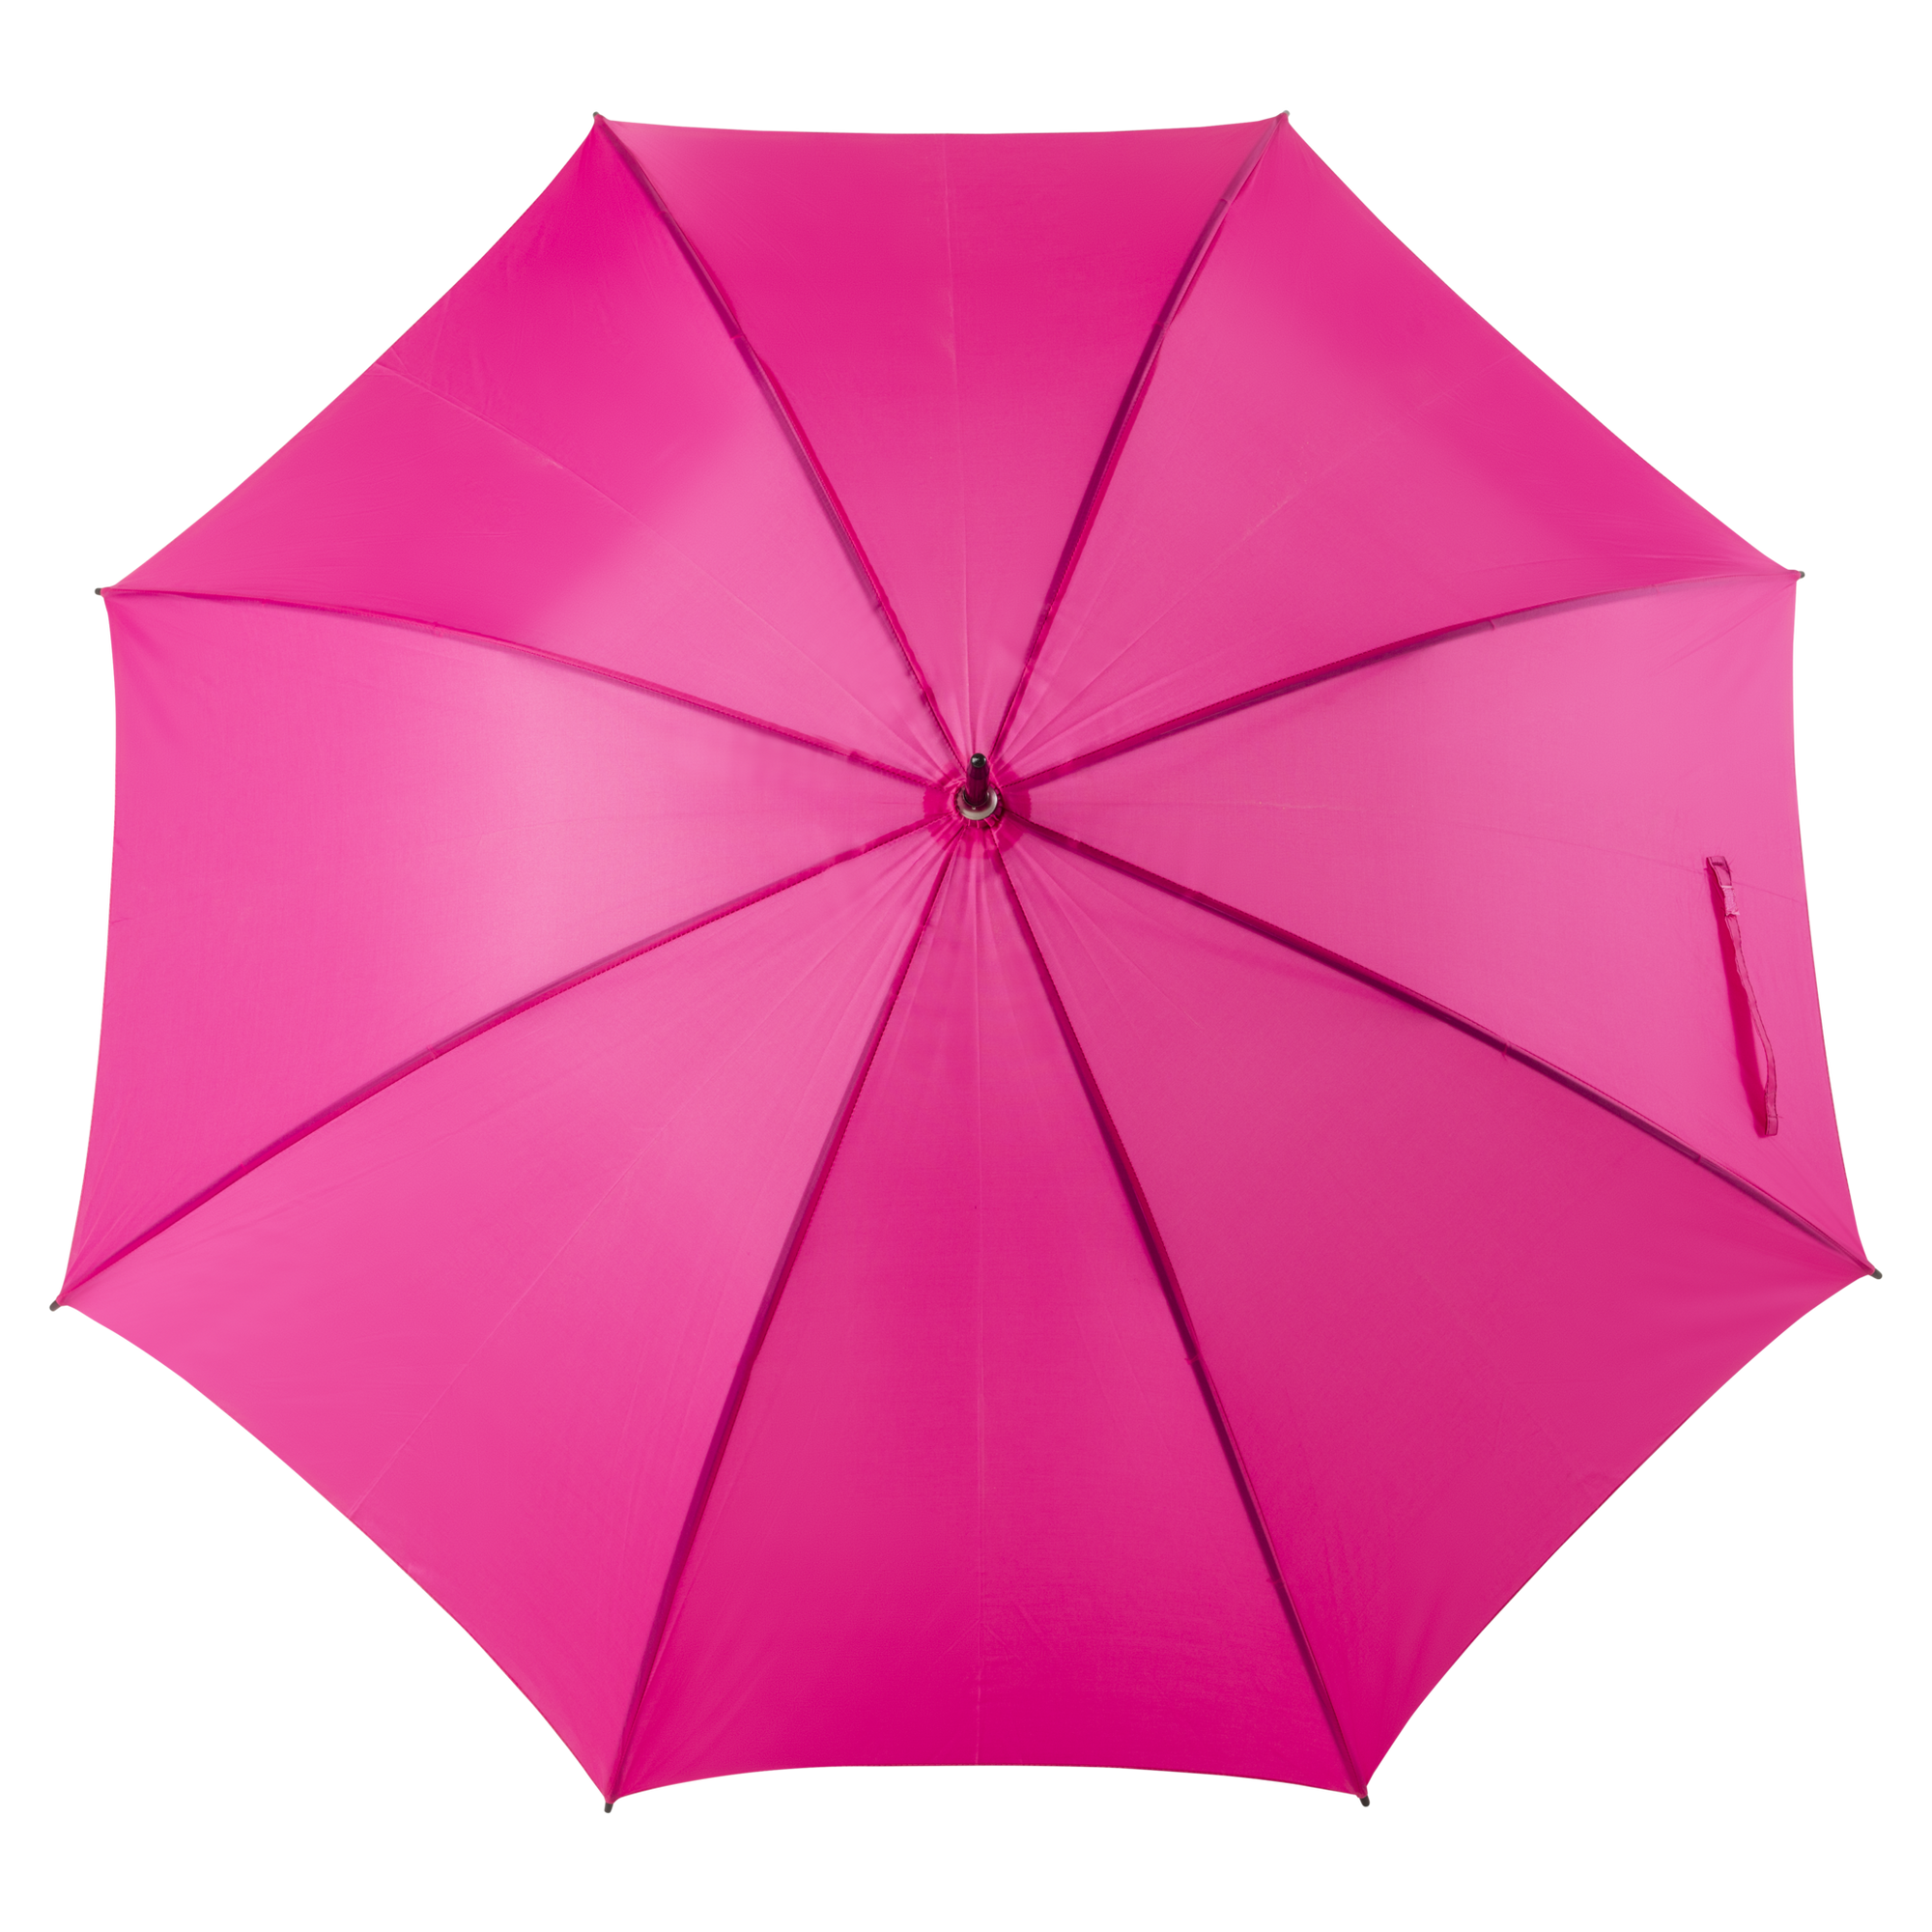 Umbrella rental - fuchsia